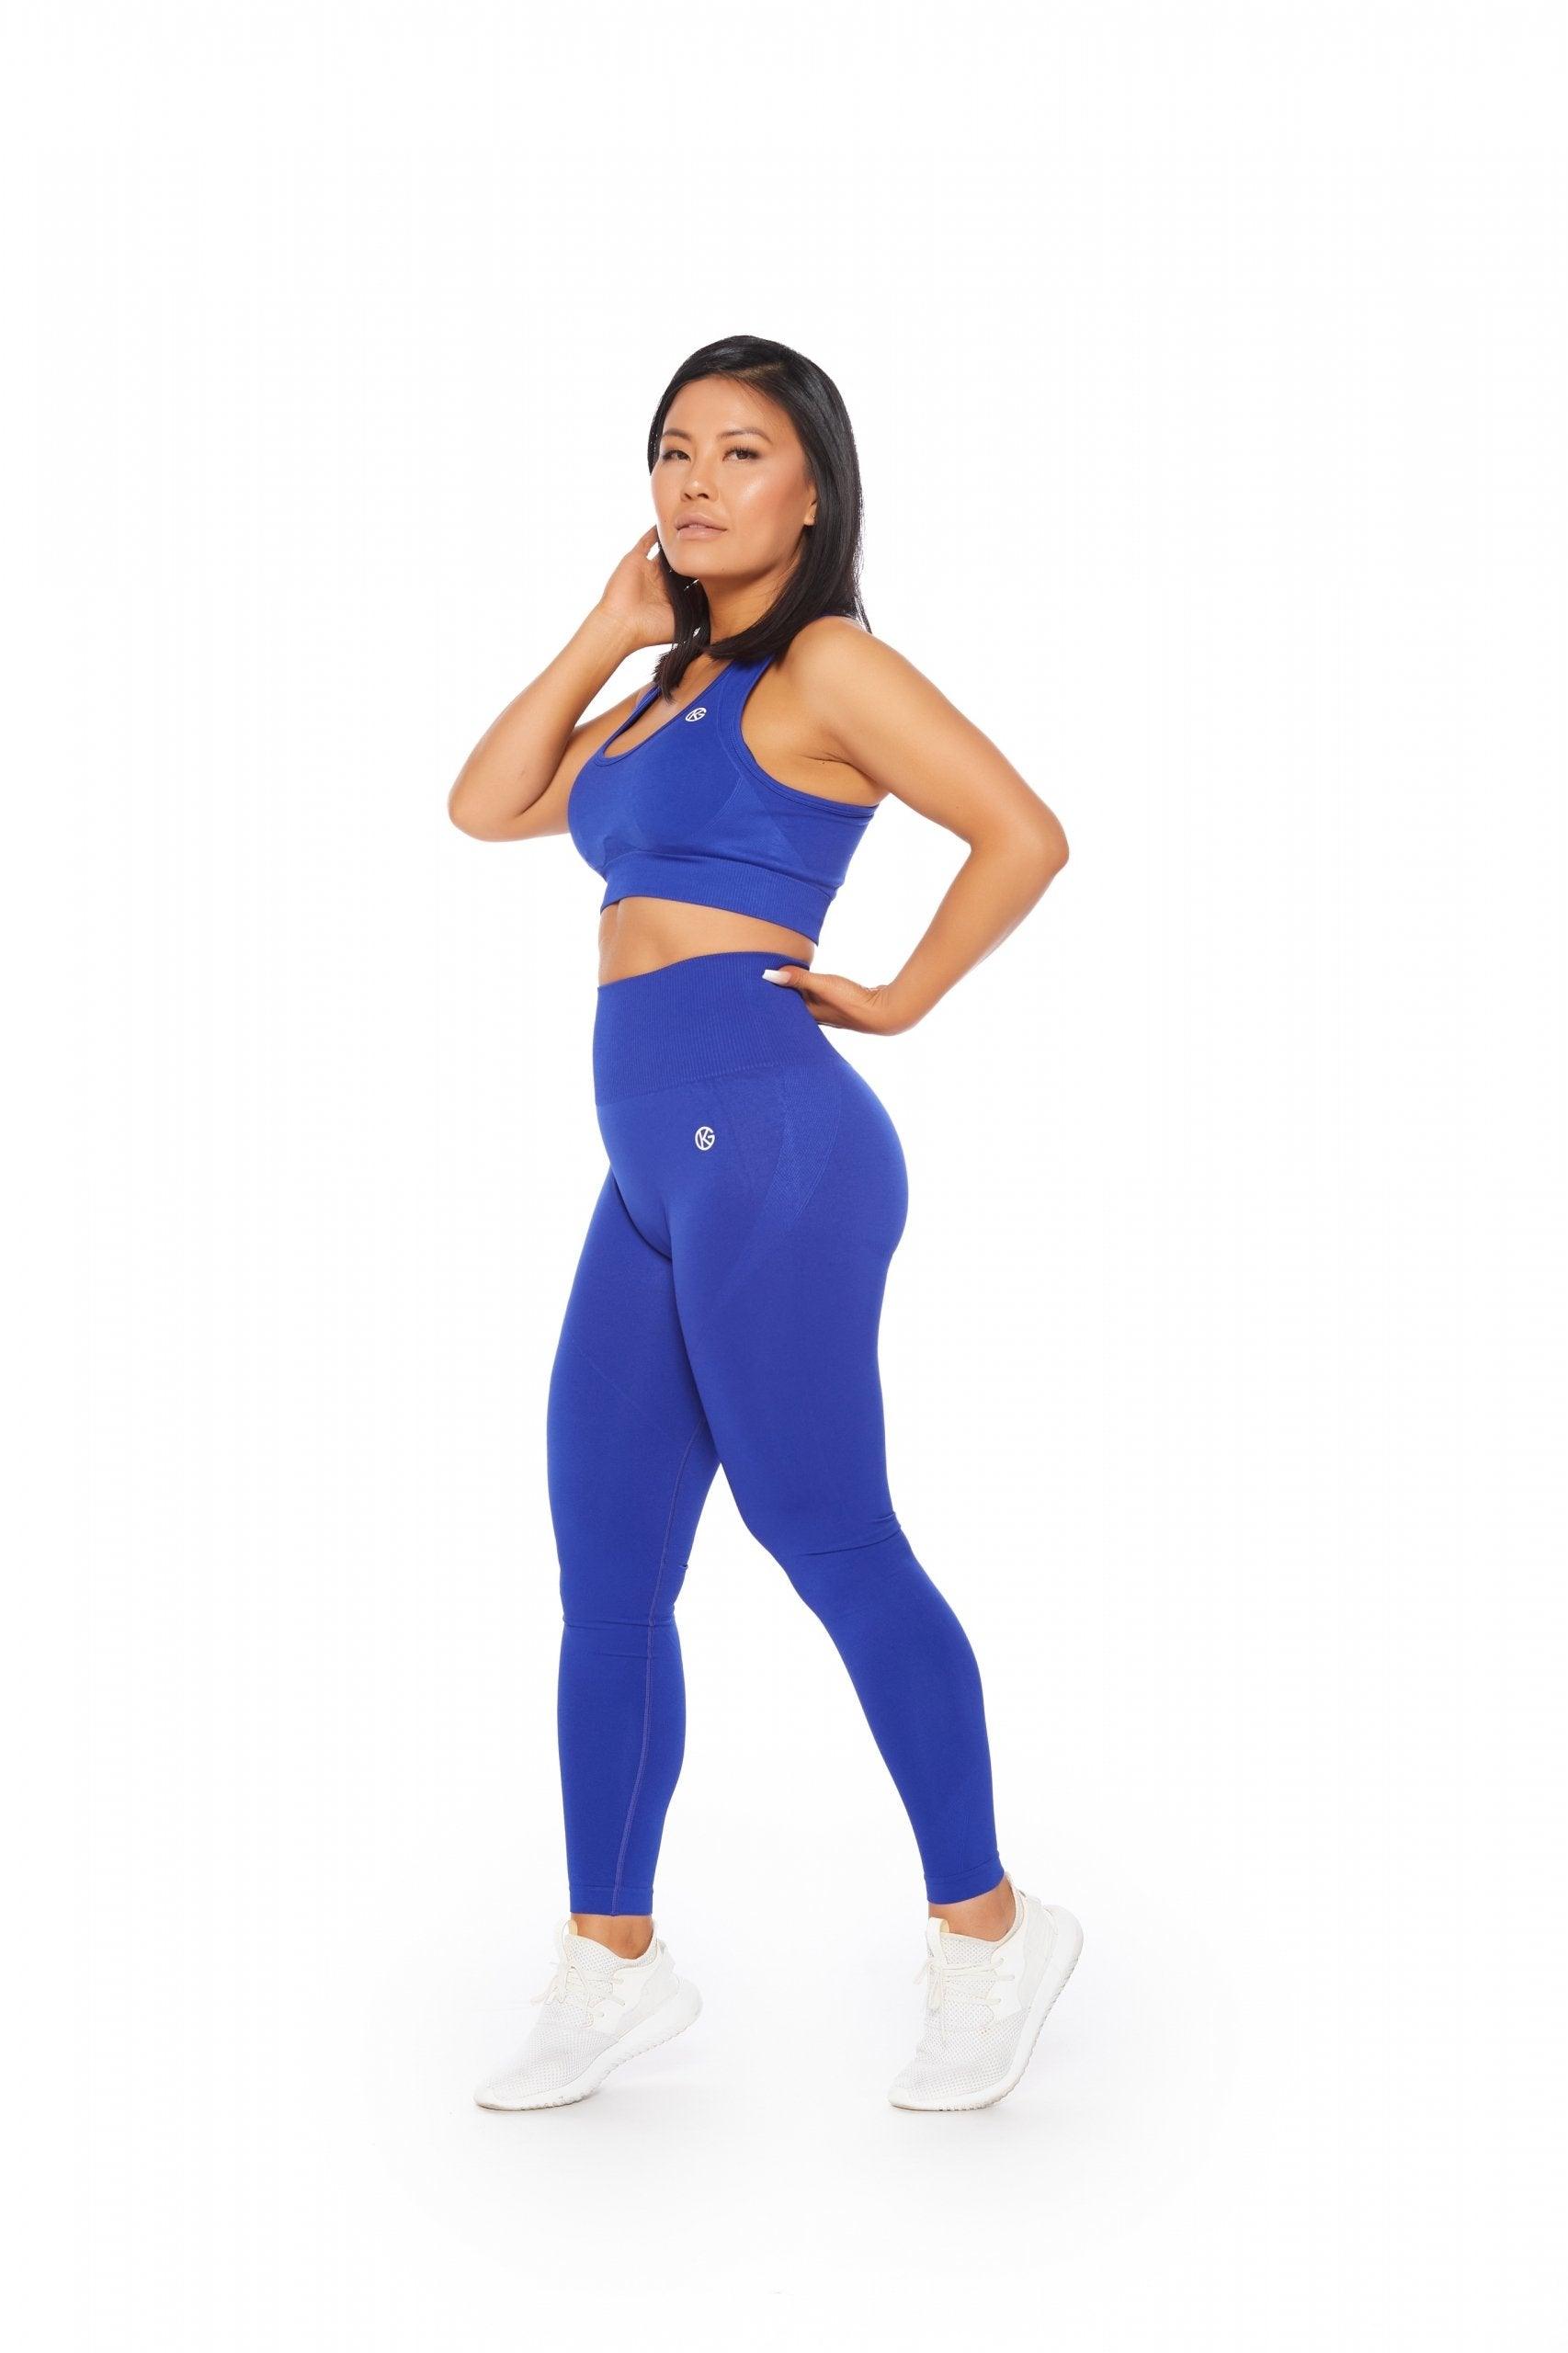 Royal Blue -Jumpsuit. Brazilian Bodysuits. Gym to street